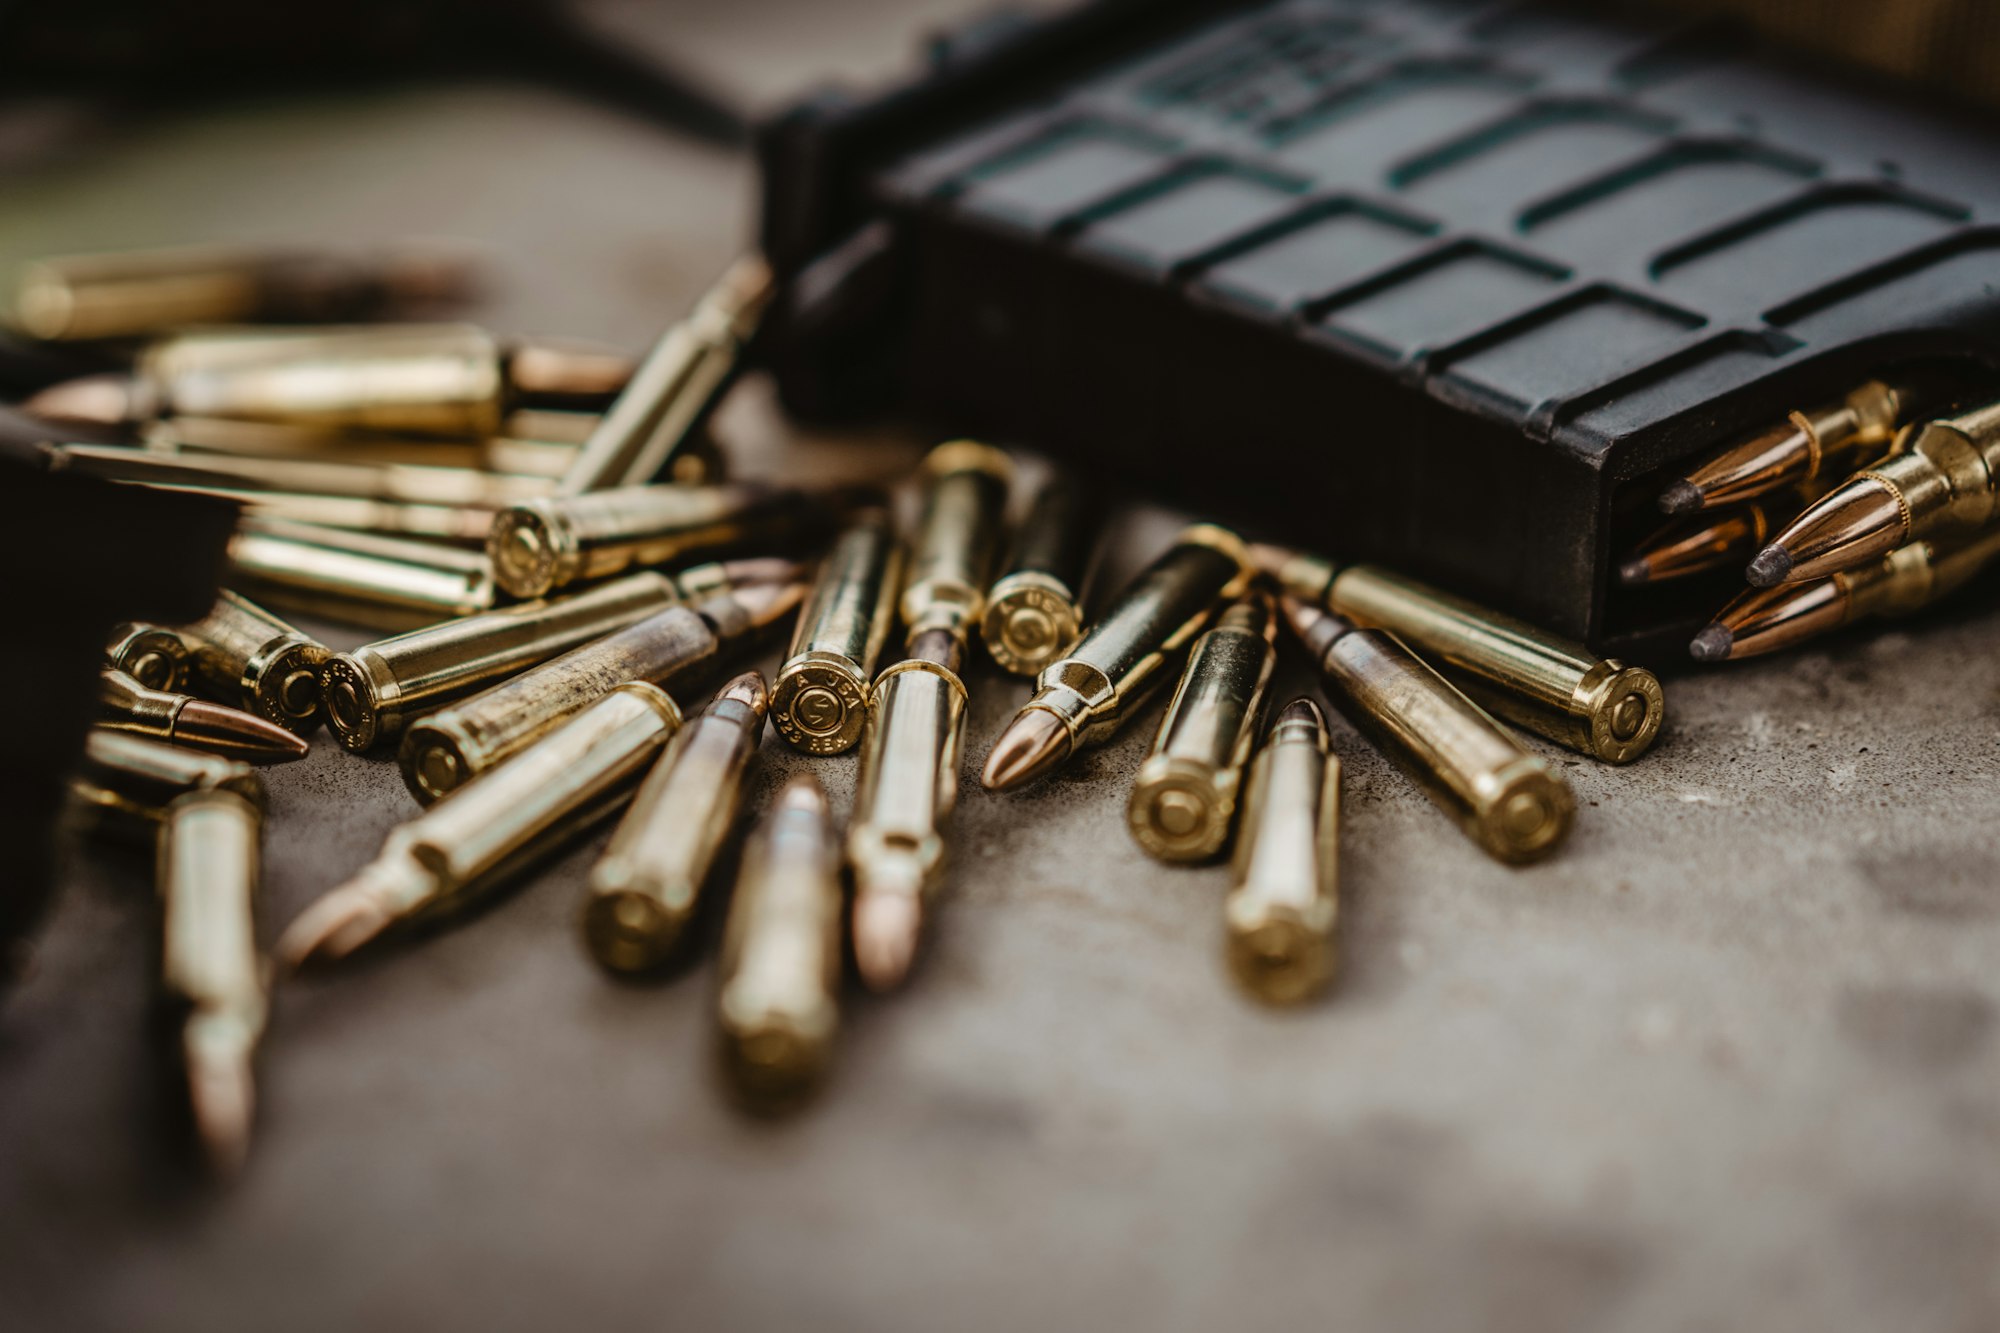 Choosing the right ammunition